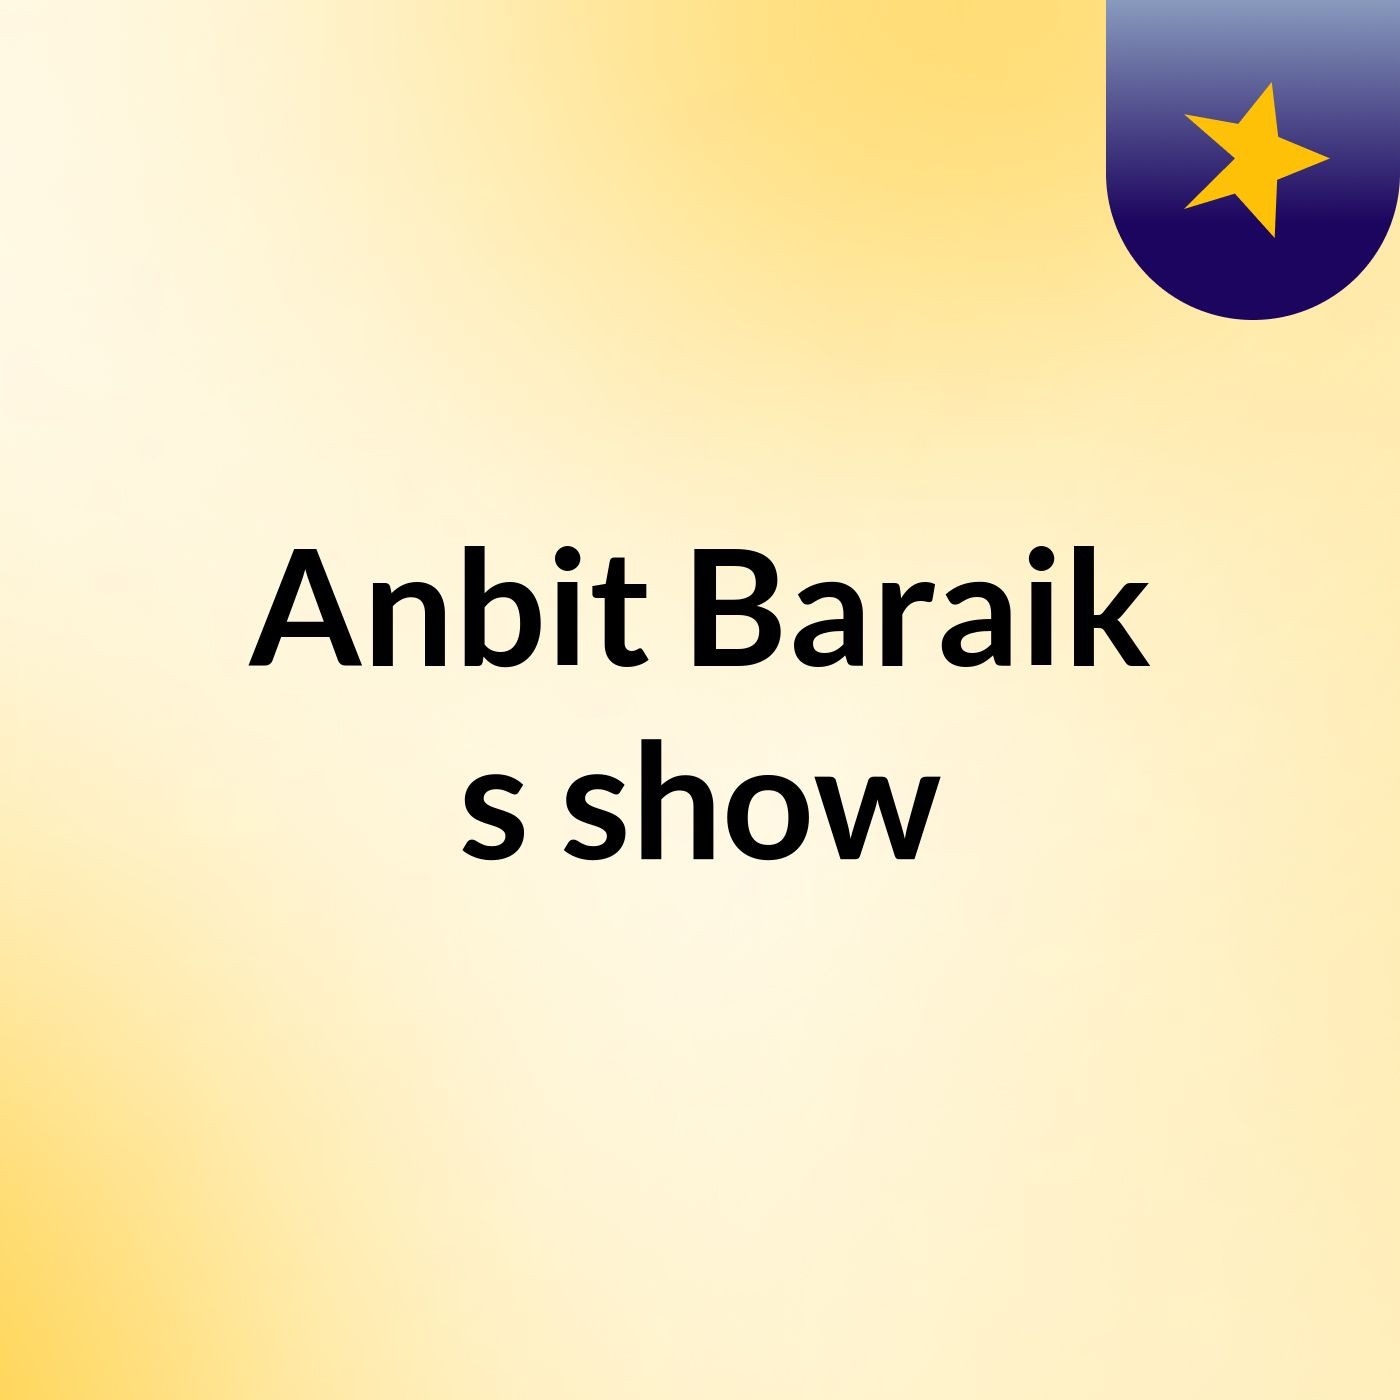 Anbit Baraik's show